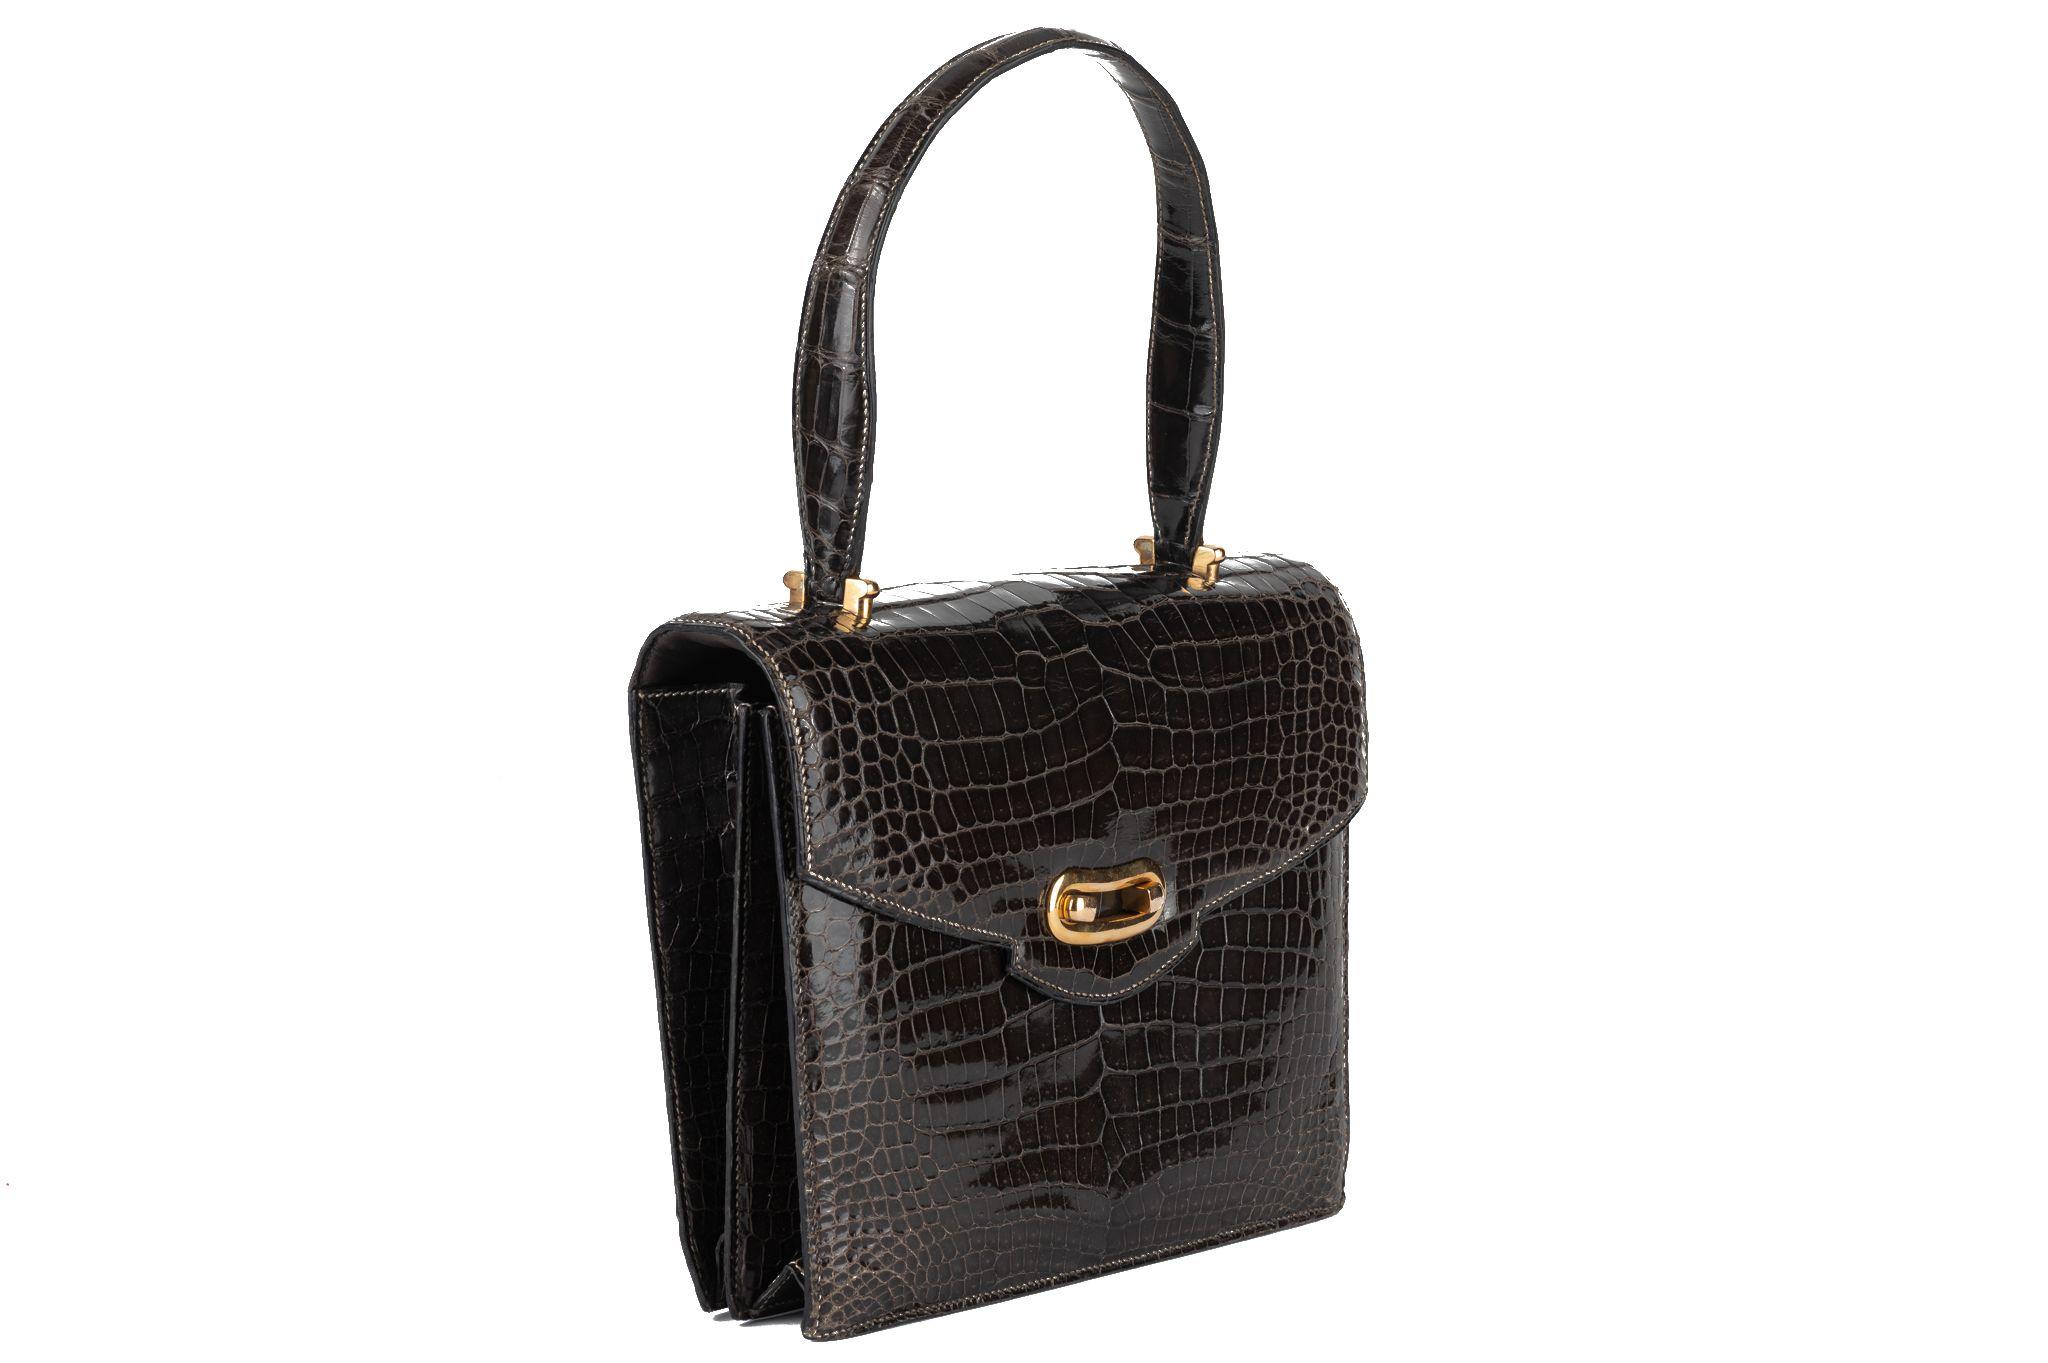 Hermès dark grey crocodile leather vintage handbag. Excellent condition , gold tone hardware. Comes with original dust cover and box .